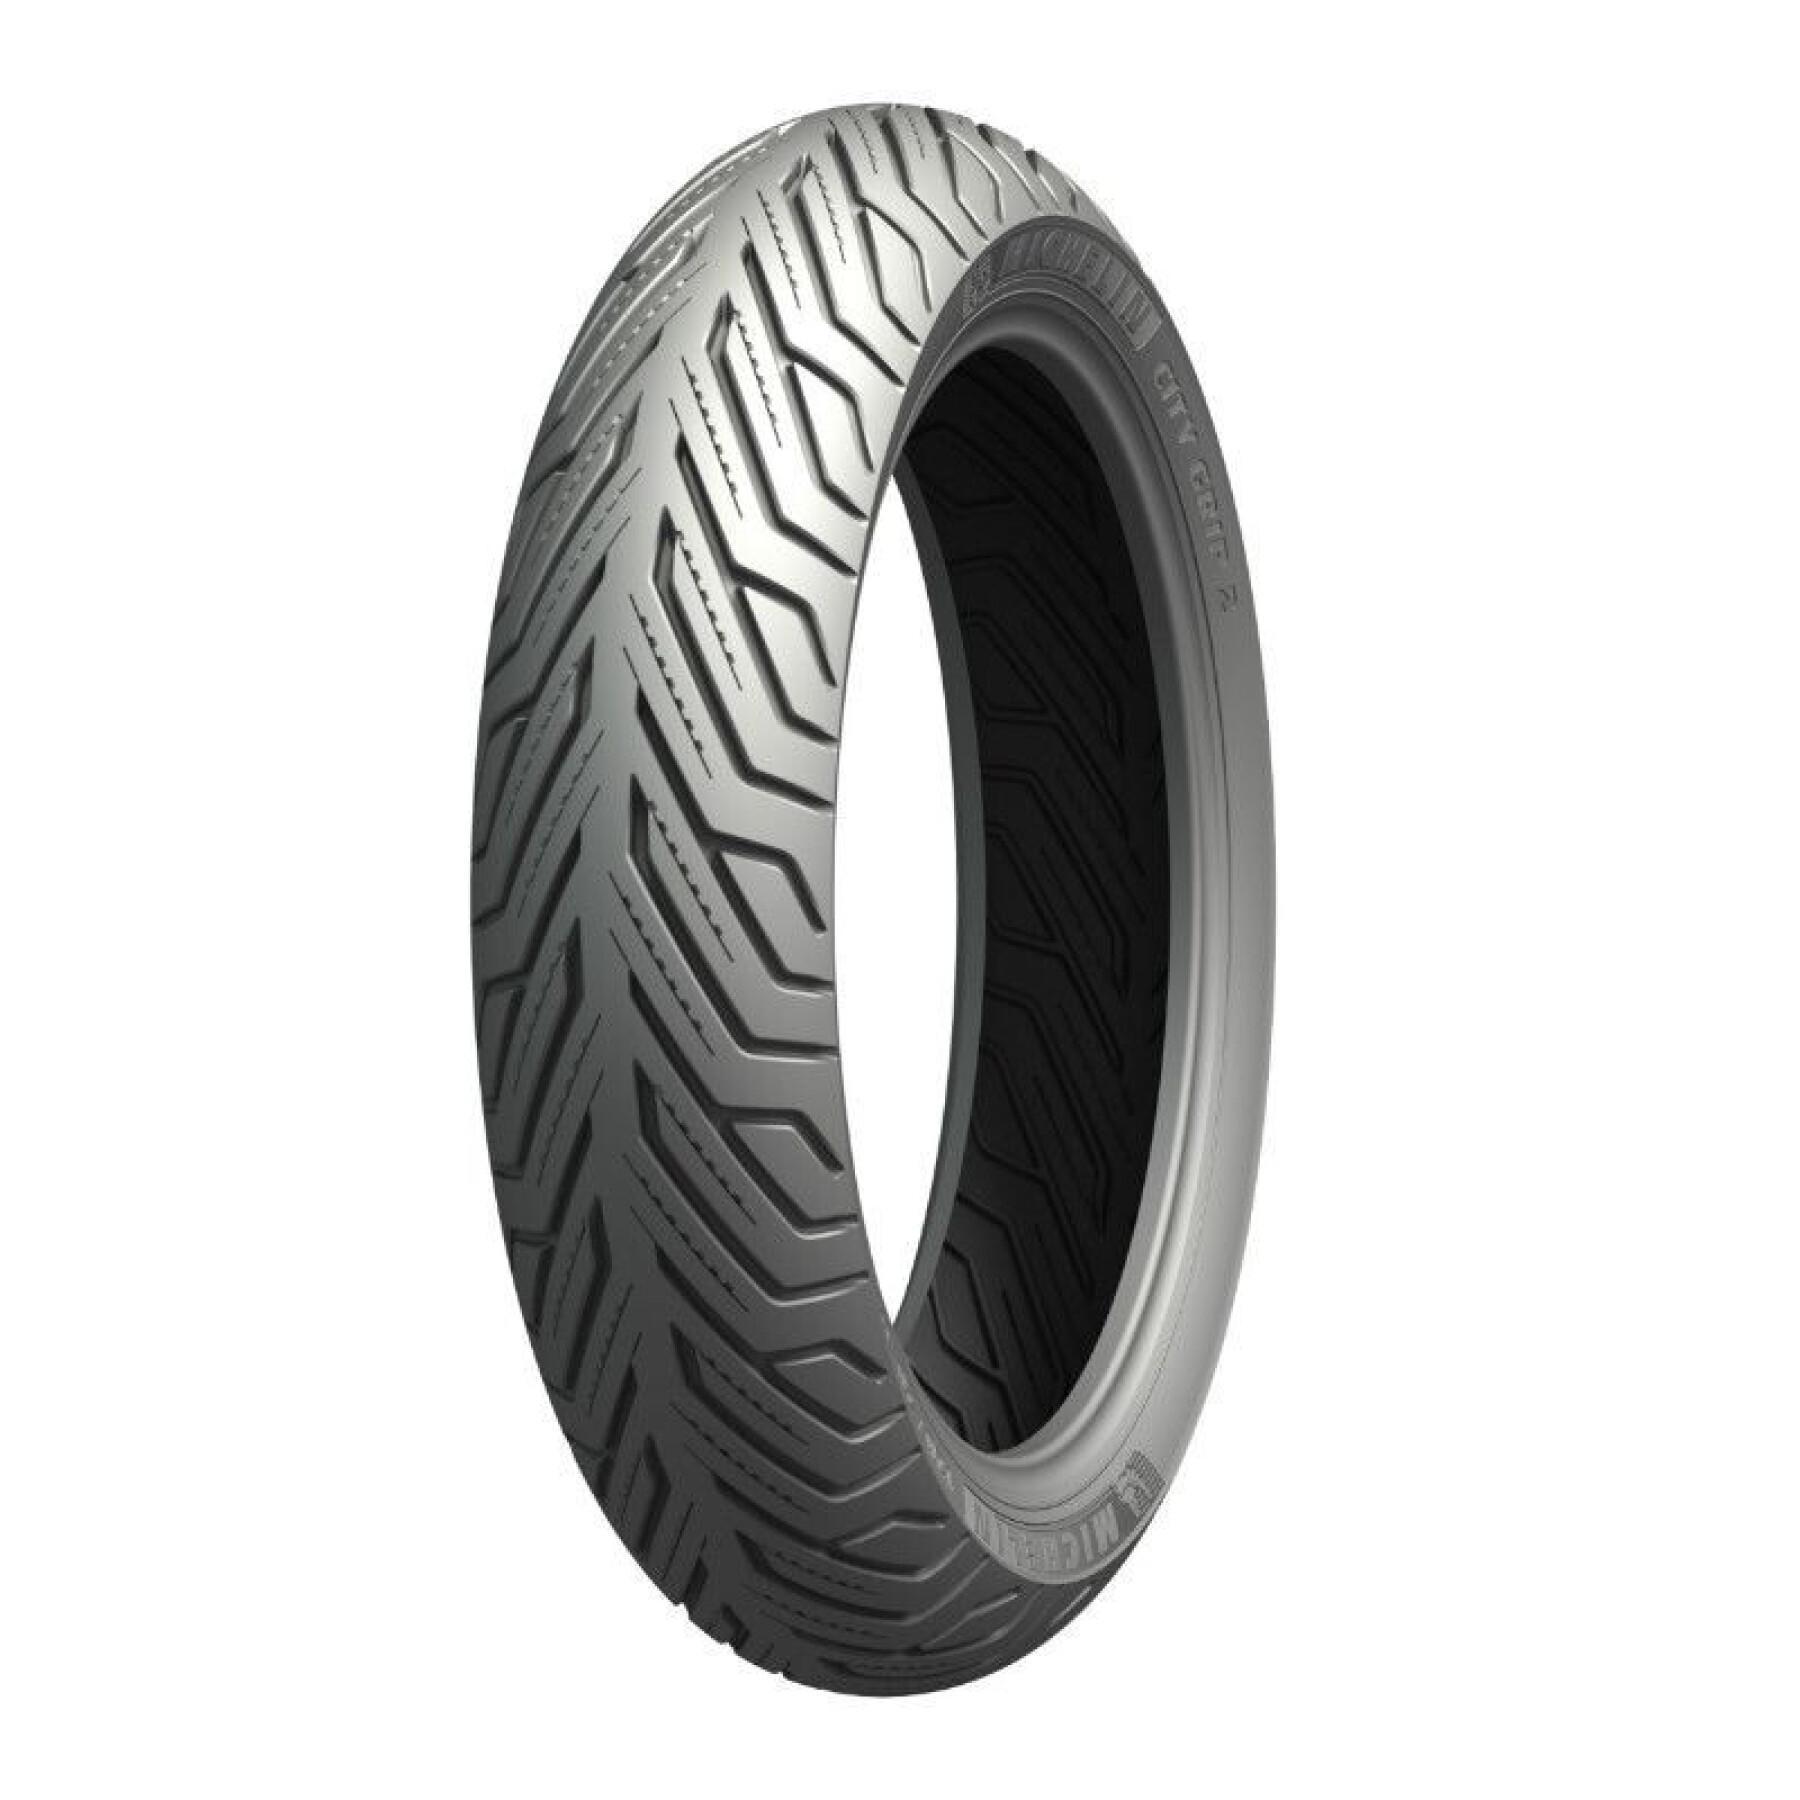 Neumático delantero/trasero de moto Michelin 110-80-14 City Grip 2 Tl 59S Reinf (139596)